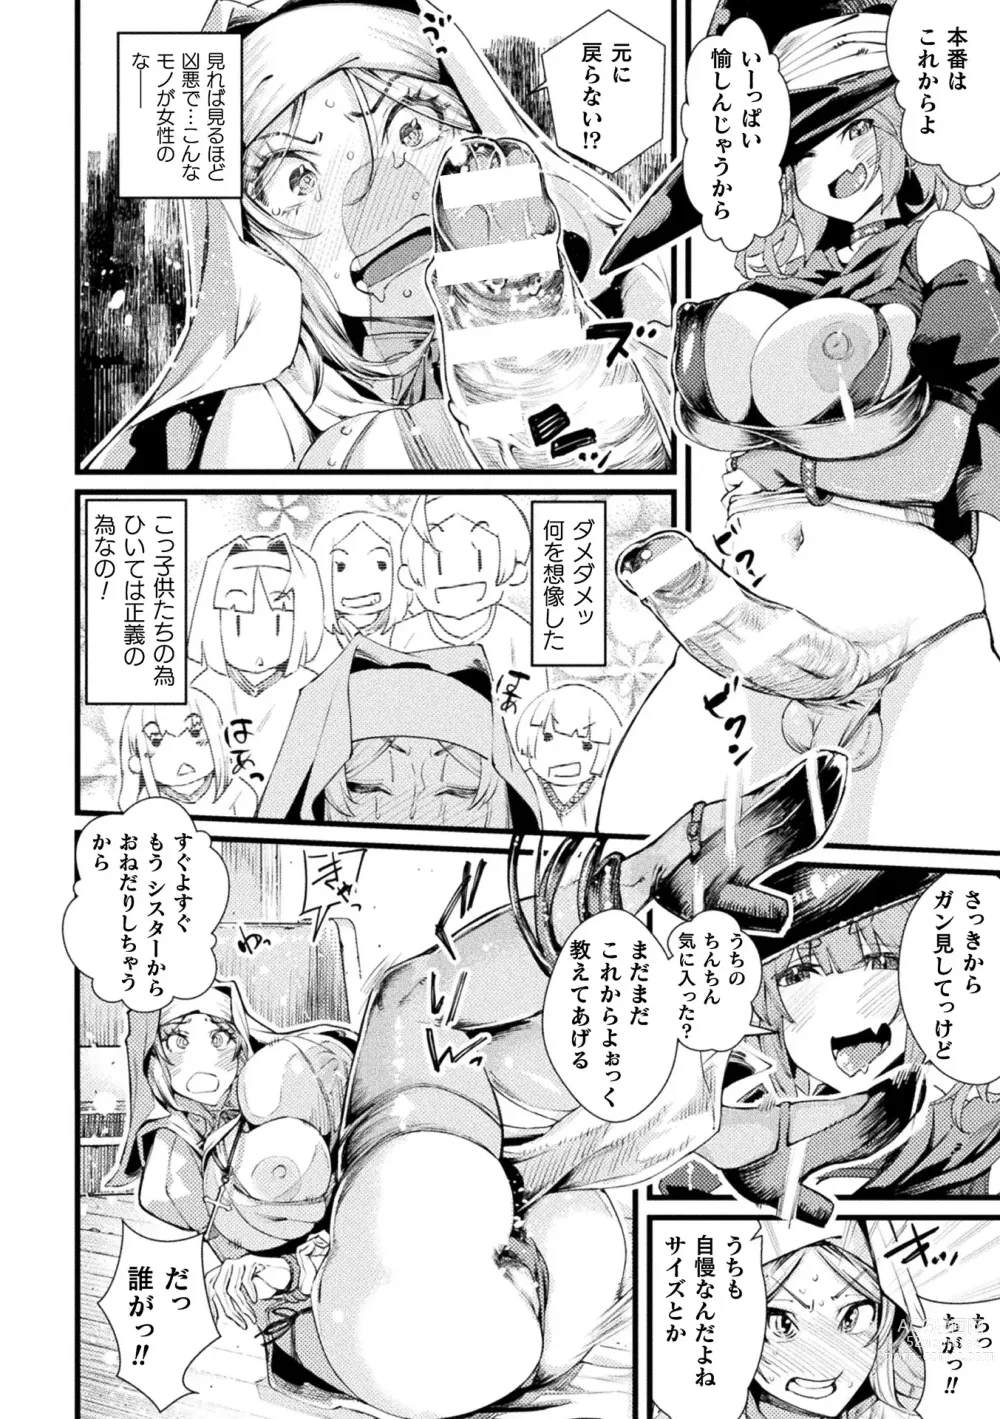 Page 80 of manga 2D Comic Magazine Akuochi Haramase Seigi no Bishoujo Akuten Jutai Vol. 1